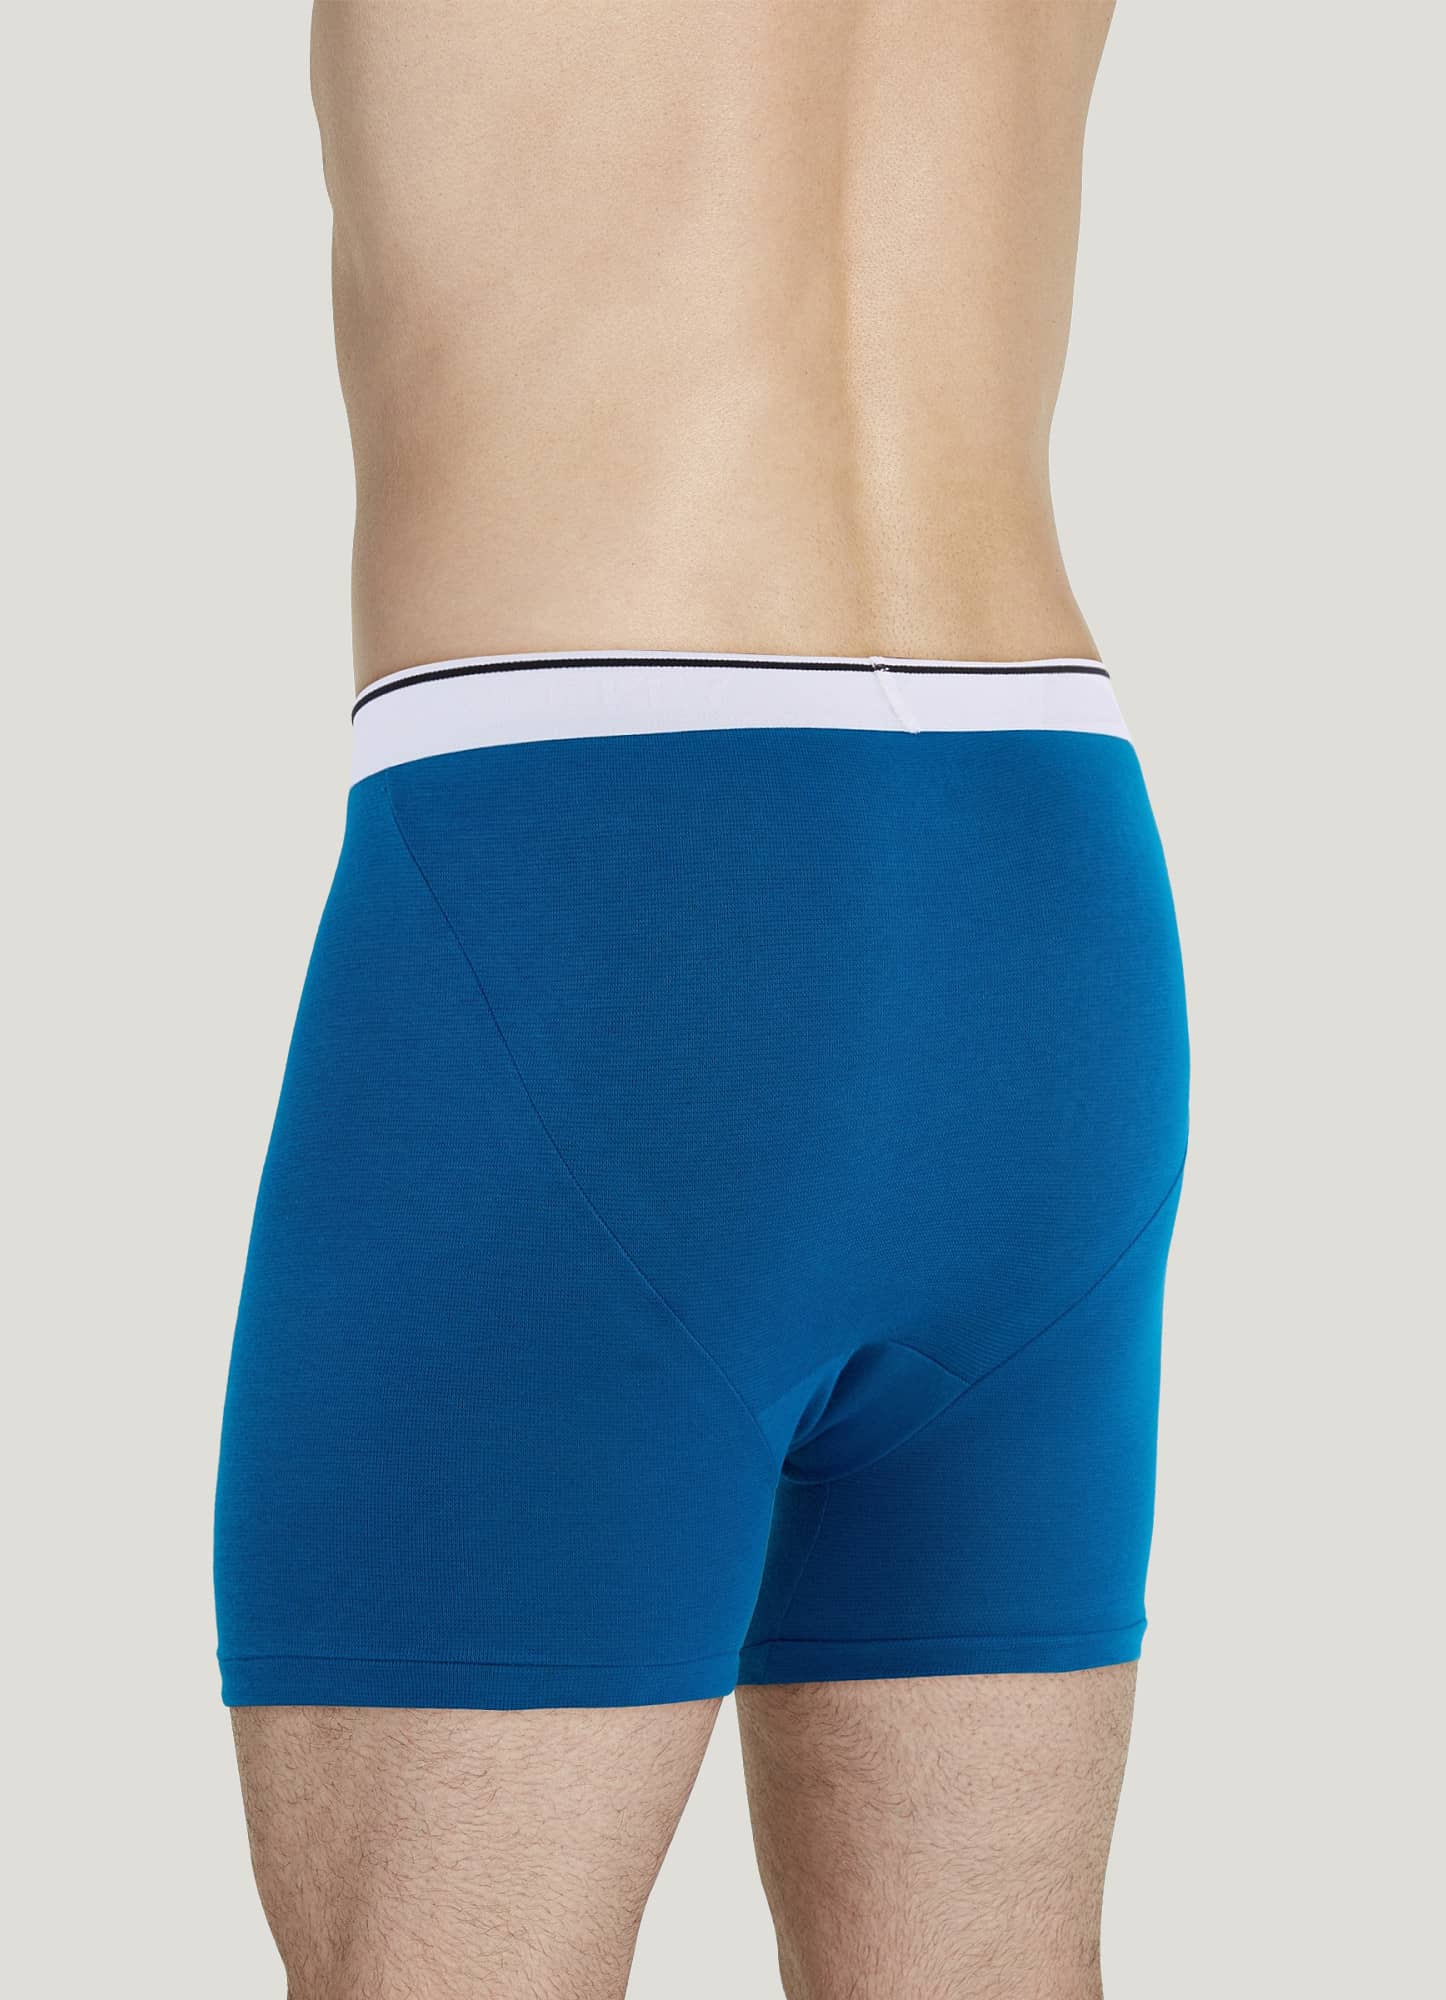 Denim print bikini men's underwear with pouch - 4 colors available***